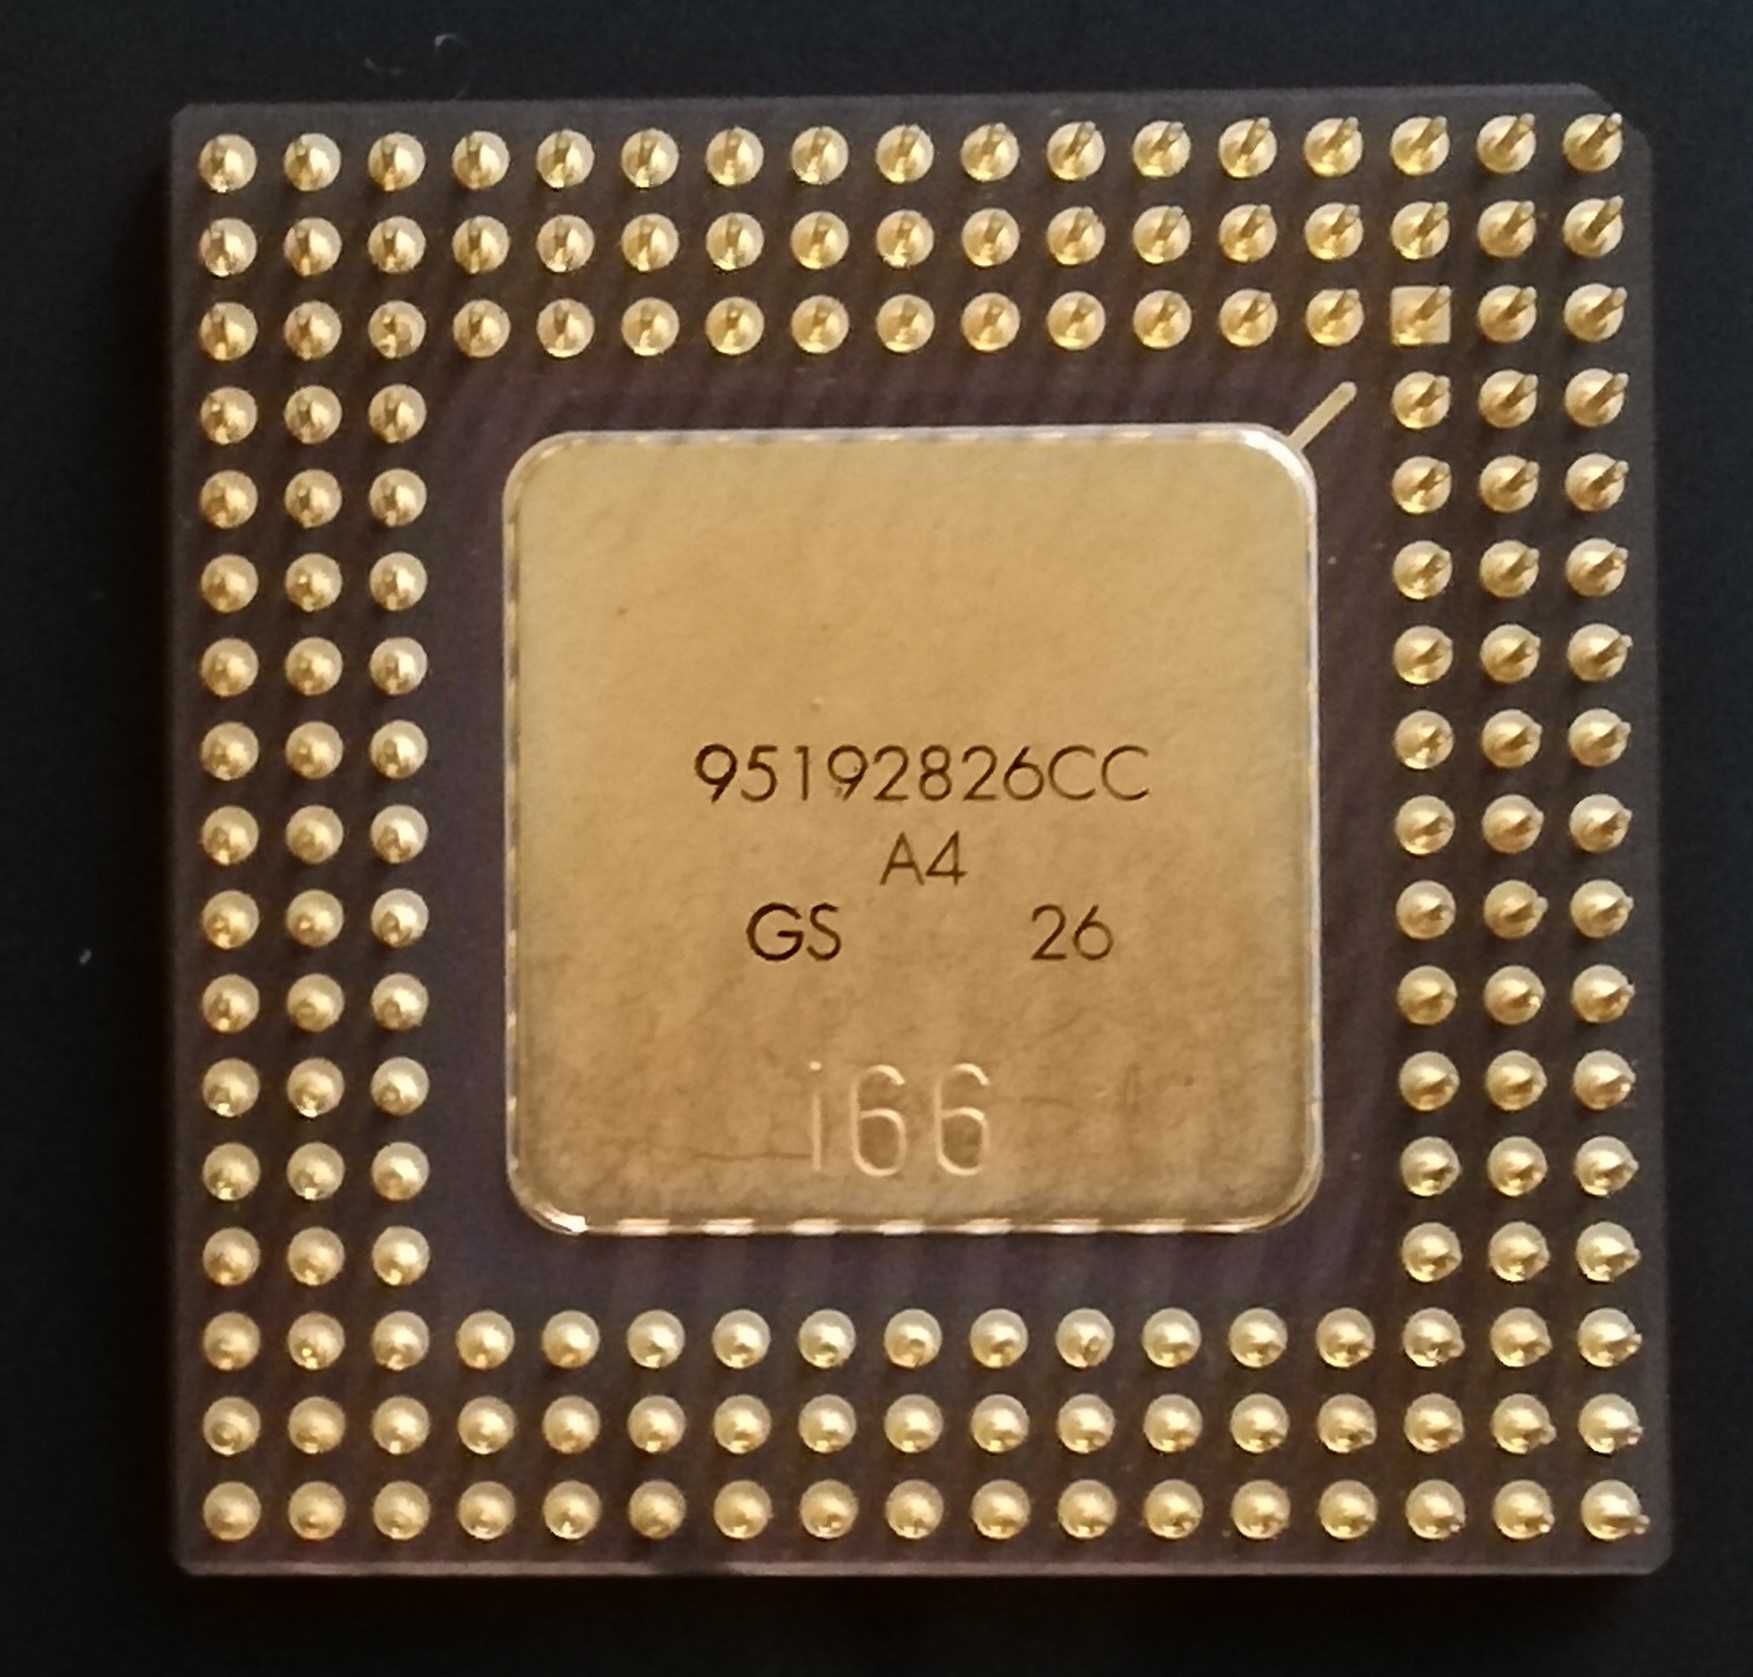 Procesor i486 DX2-66